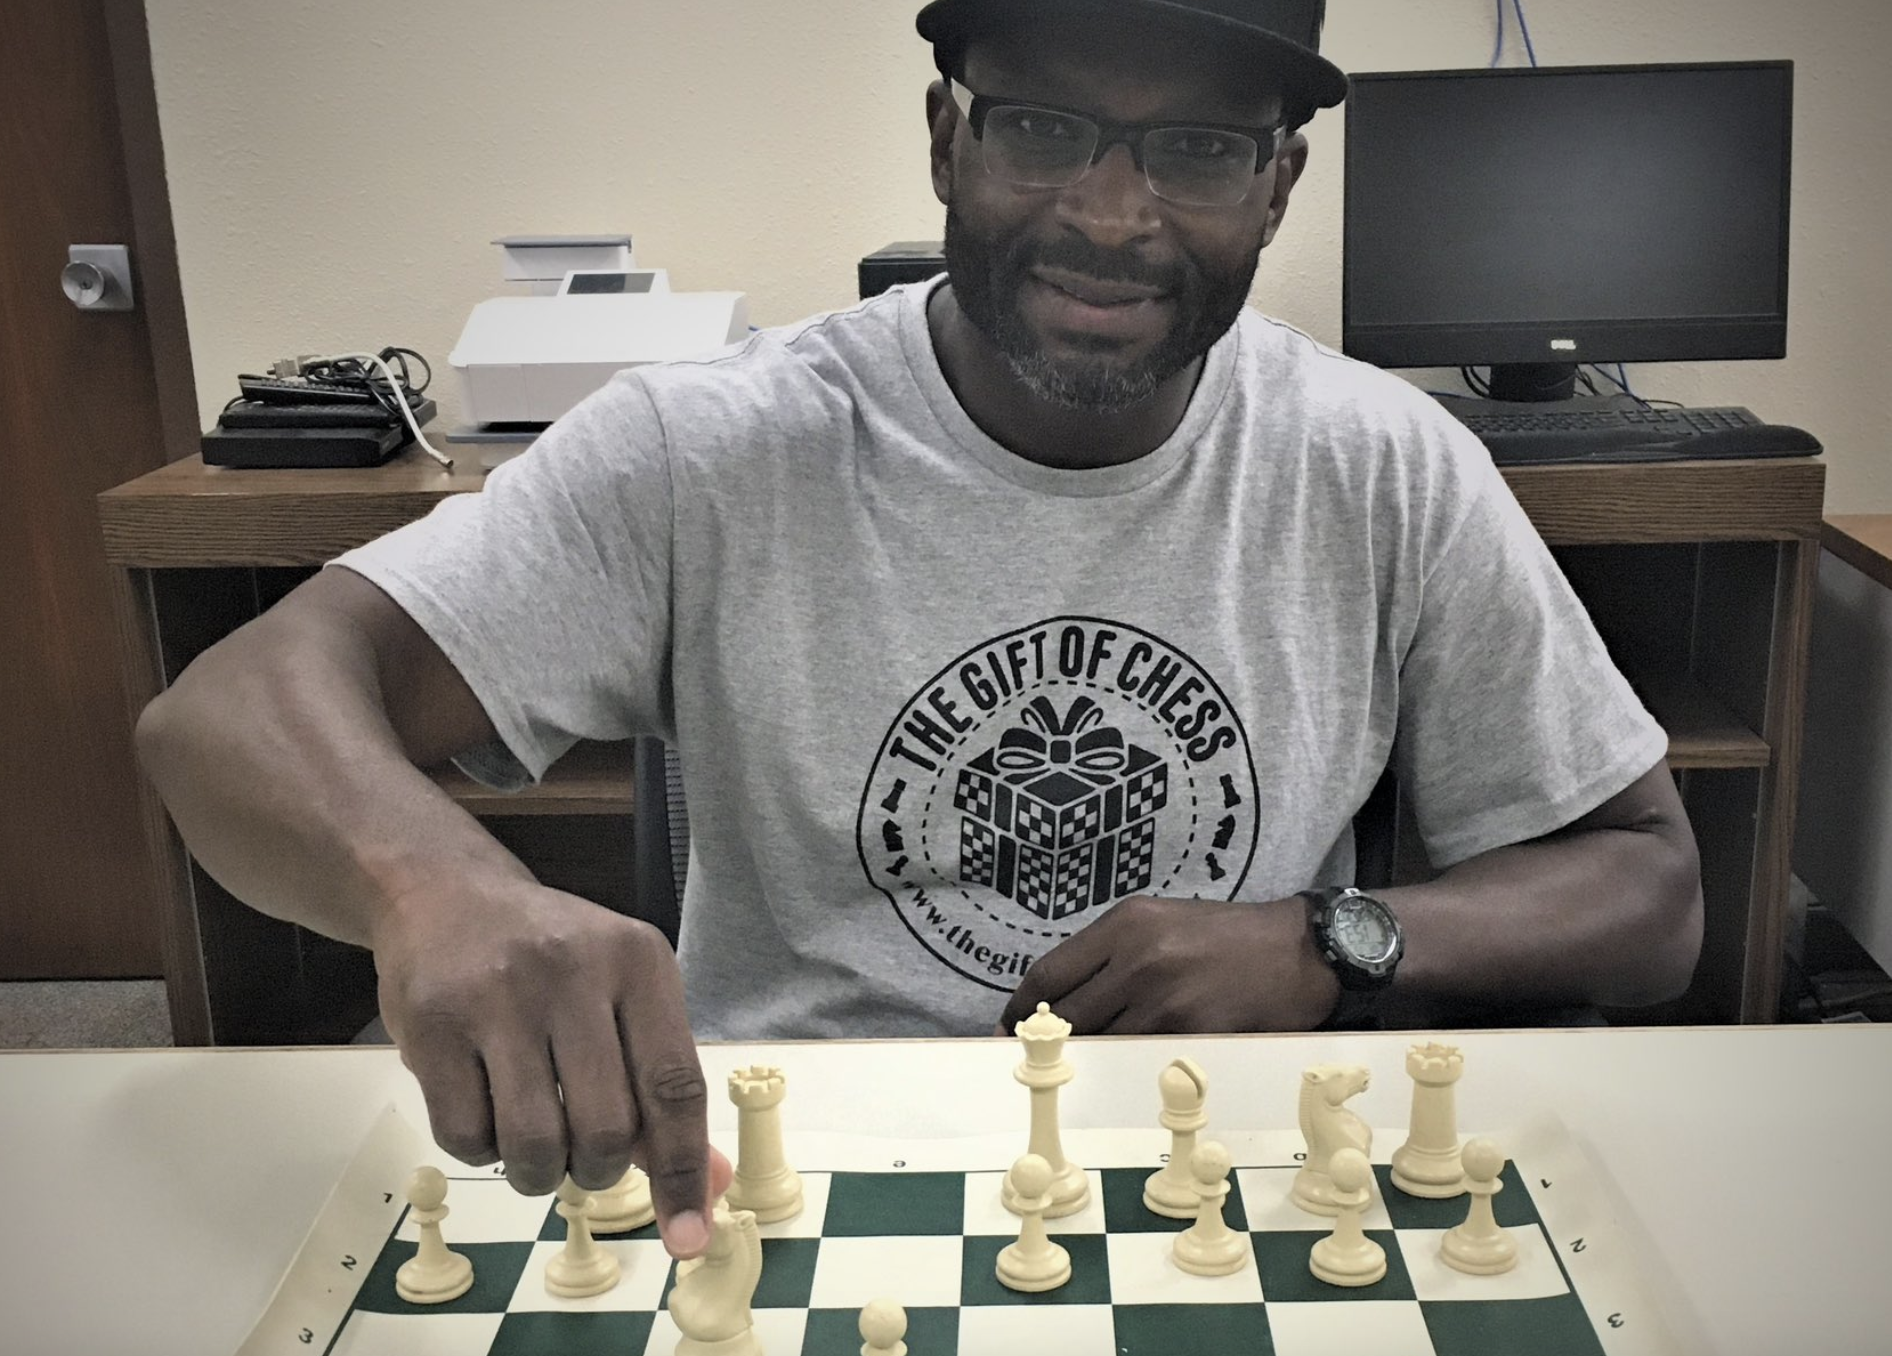 Organizers seek to reestablish local chess club, Local News